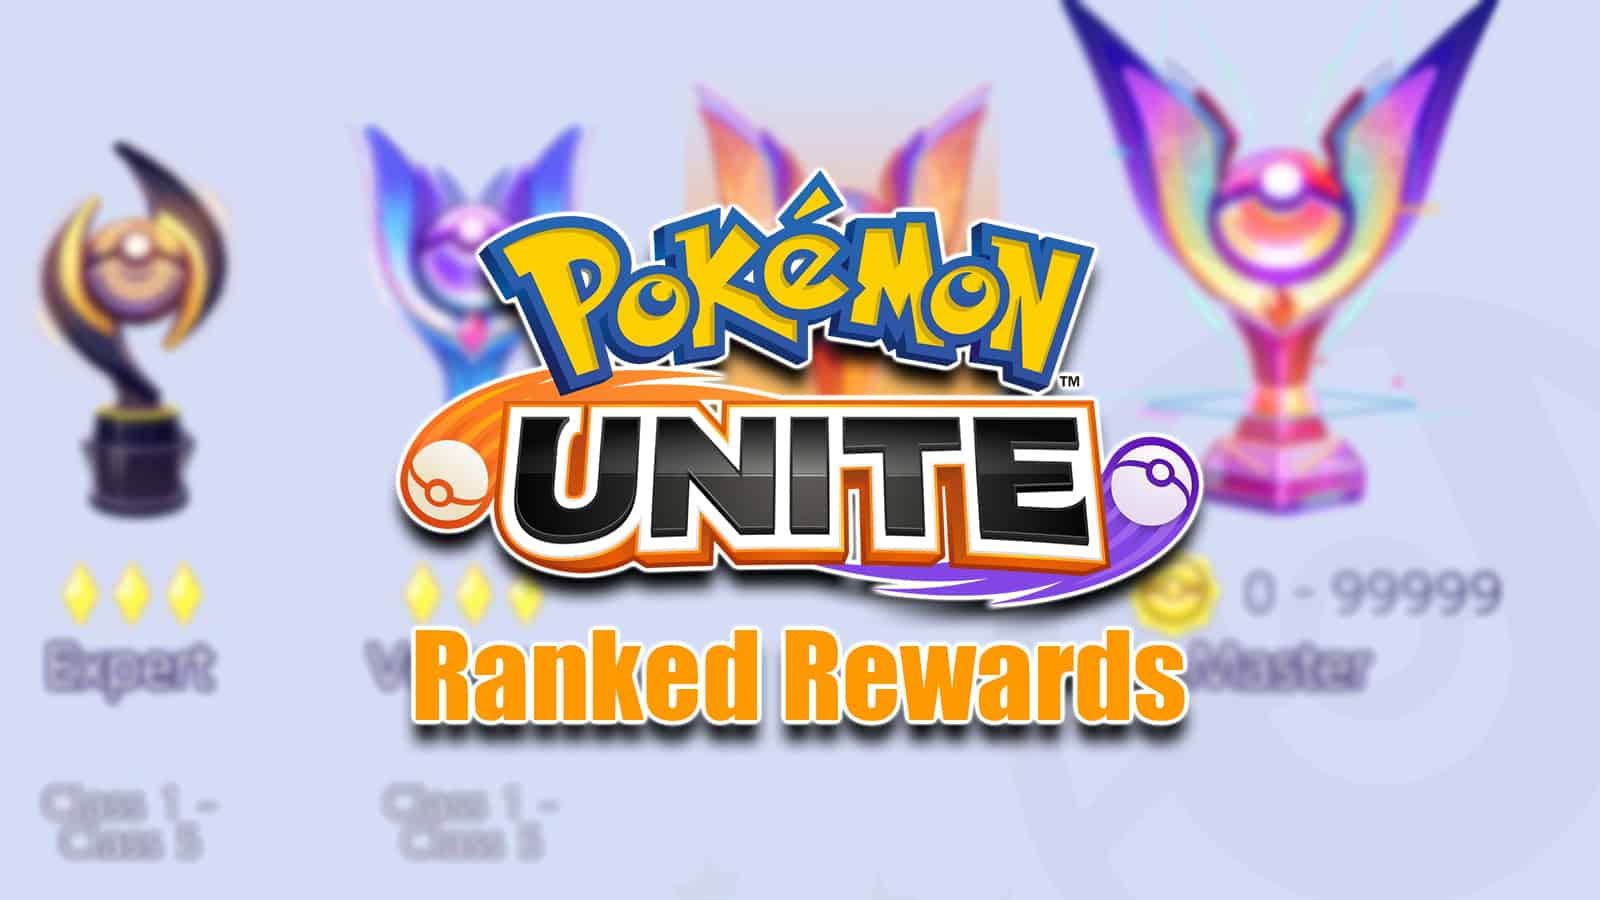 Pokemon Unite Ranked Rewards